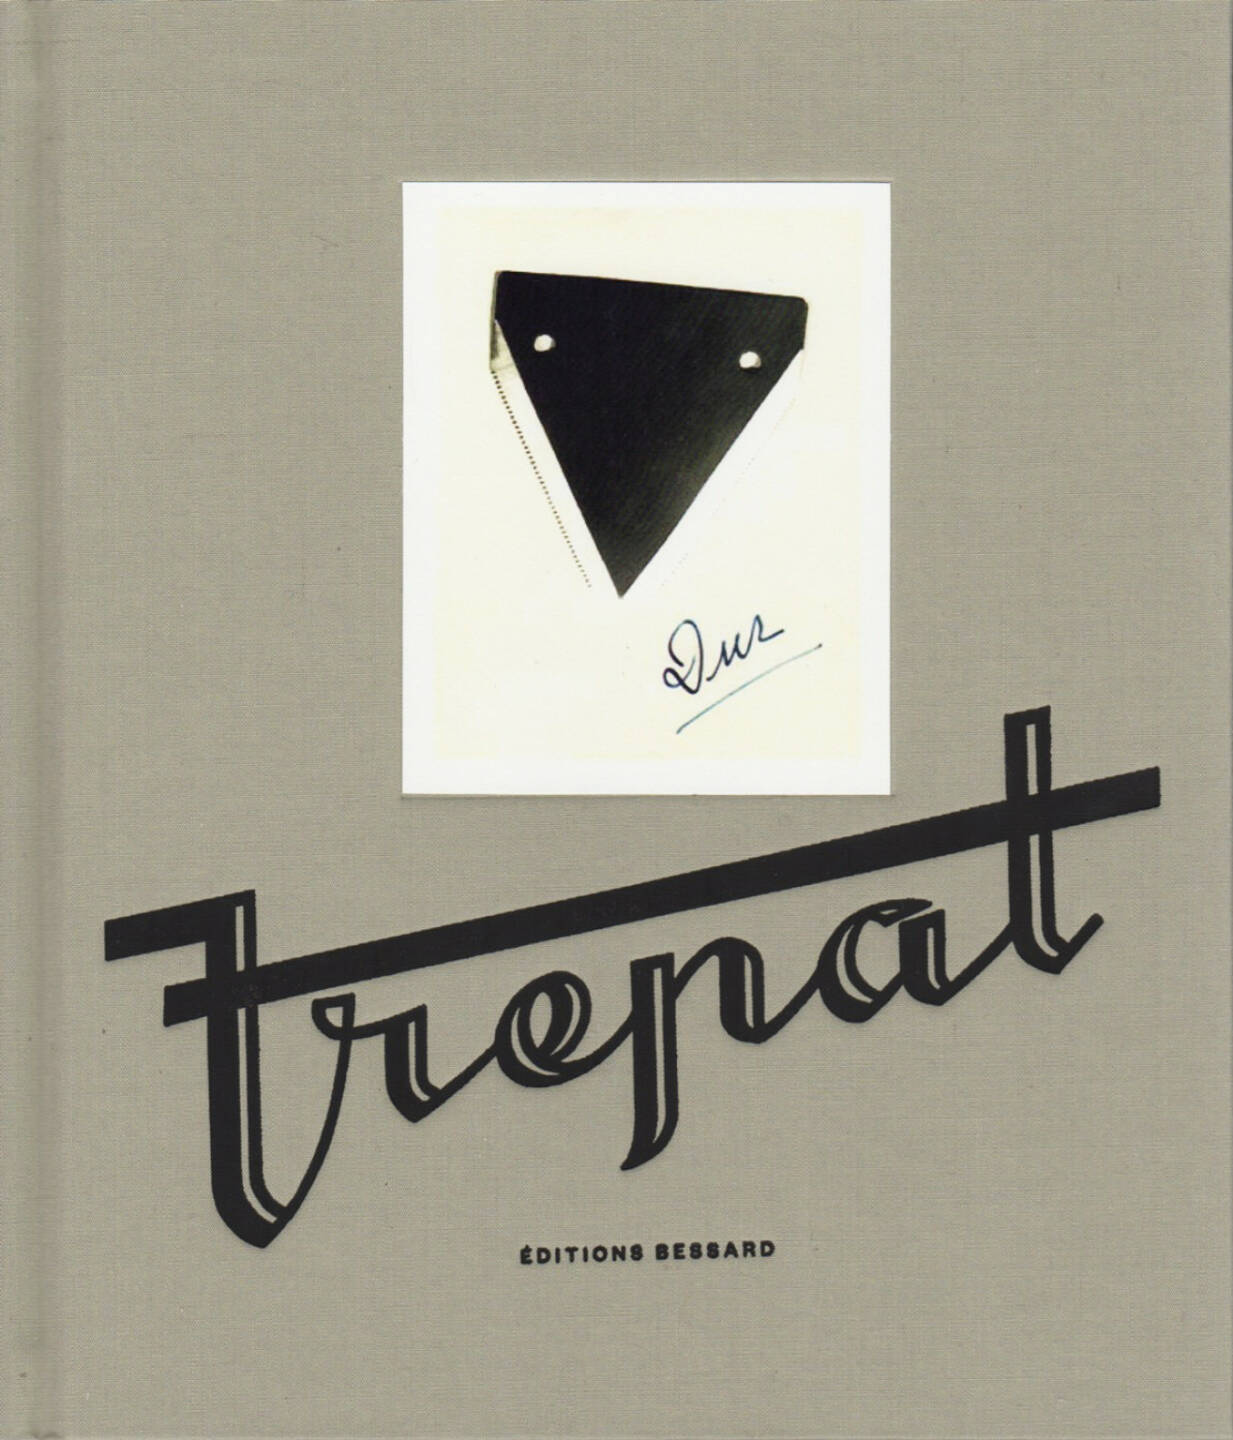 Joan Fontcuberta - Trepat - A Case Study in Avant-Garde Photography, Edition Bessard 2014, Cover - http://josefchladek.com/book/joan_fontcuberta_-_trepat_-_a_case_study_in_avant-garde_photography#image-3